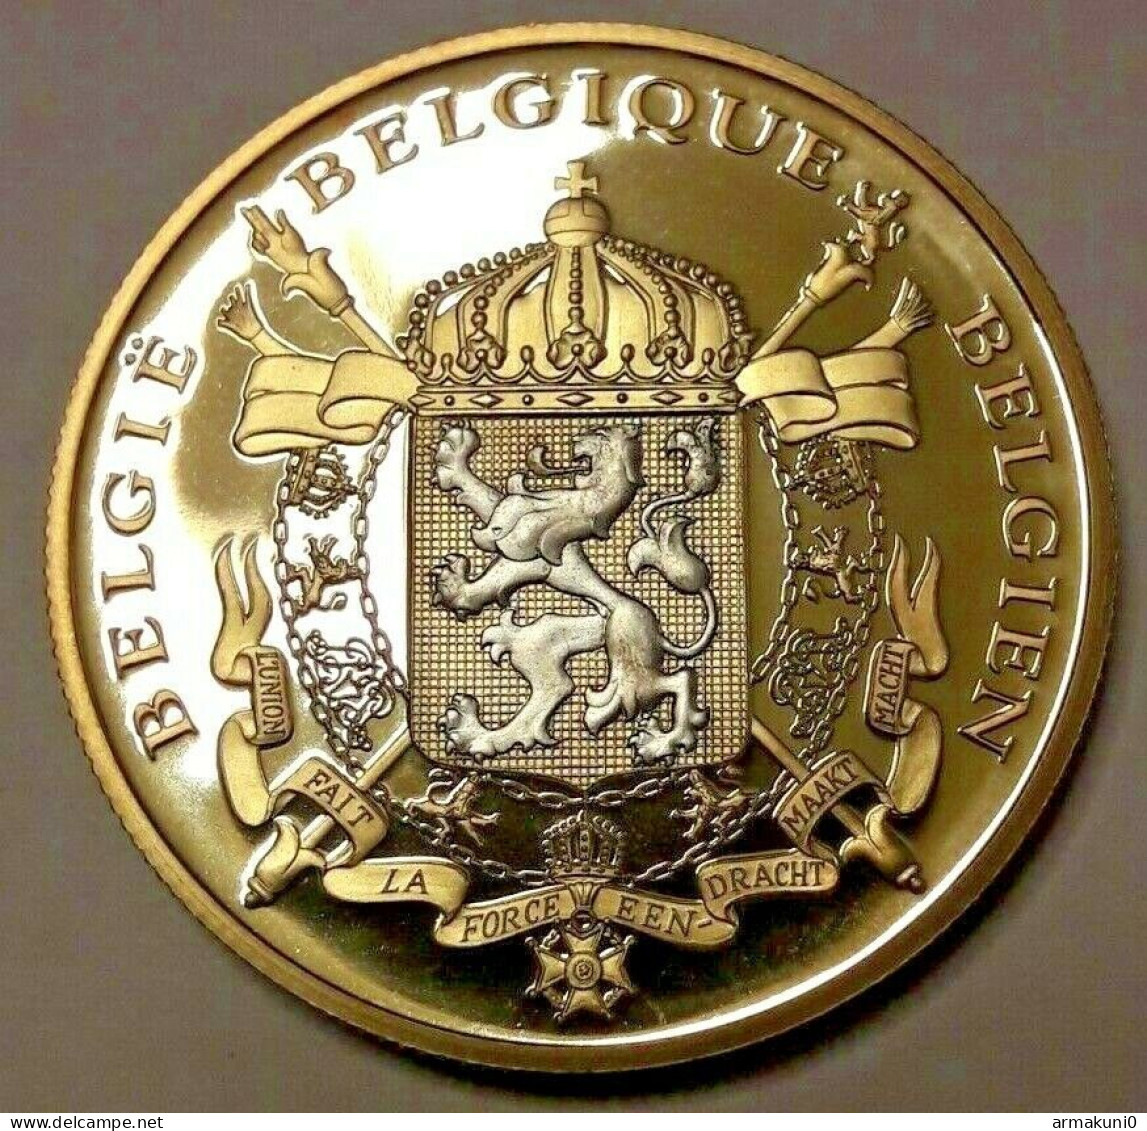 Medaille Albert II Belgarum Reges 2013 Philippe L'abdication Du Roi Albert II - Royaux / De Noblesse